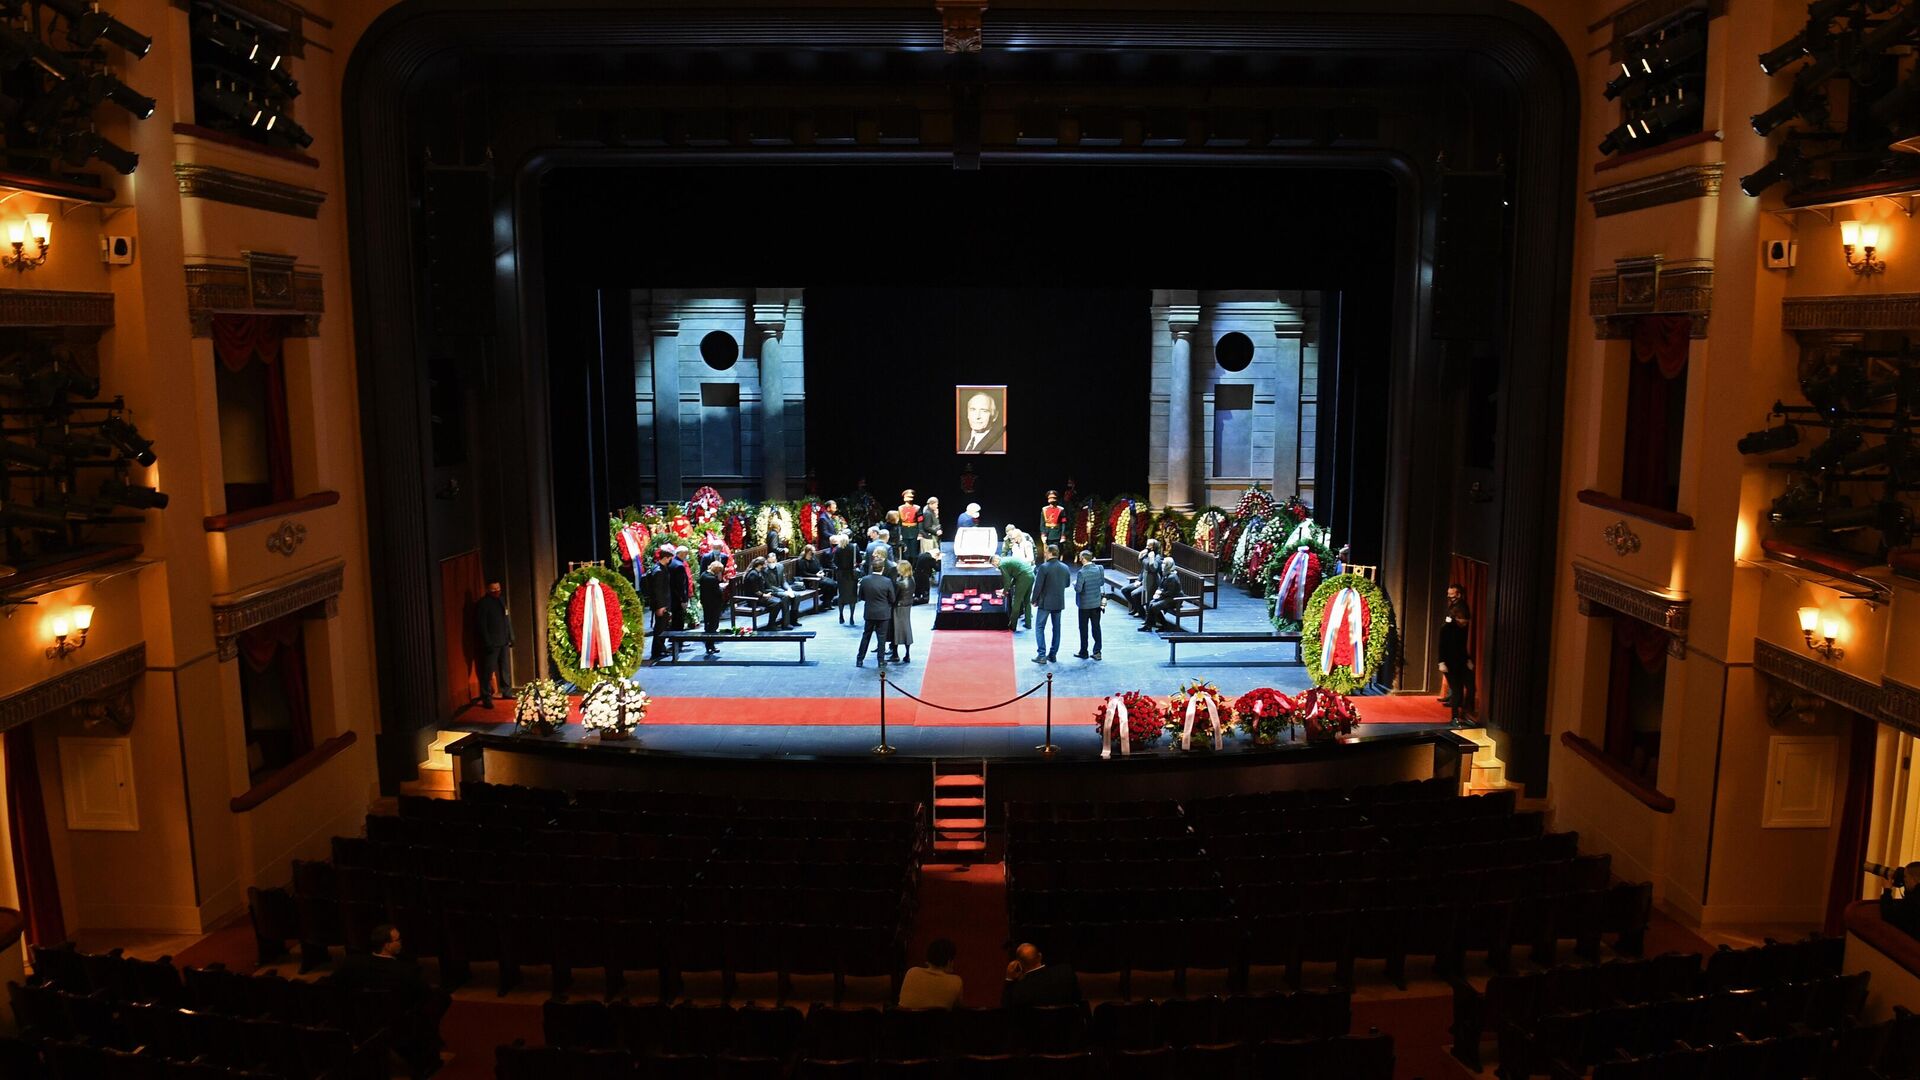 Театр Вахтангова Фото Зала Основная Сцена